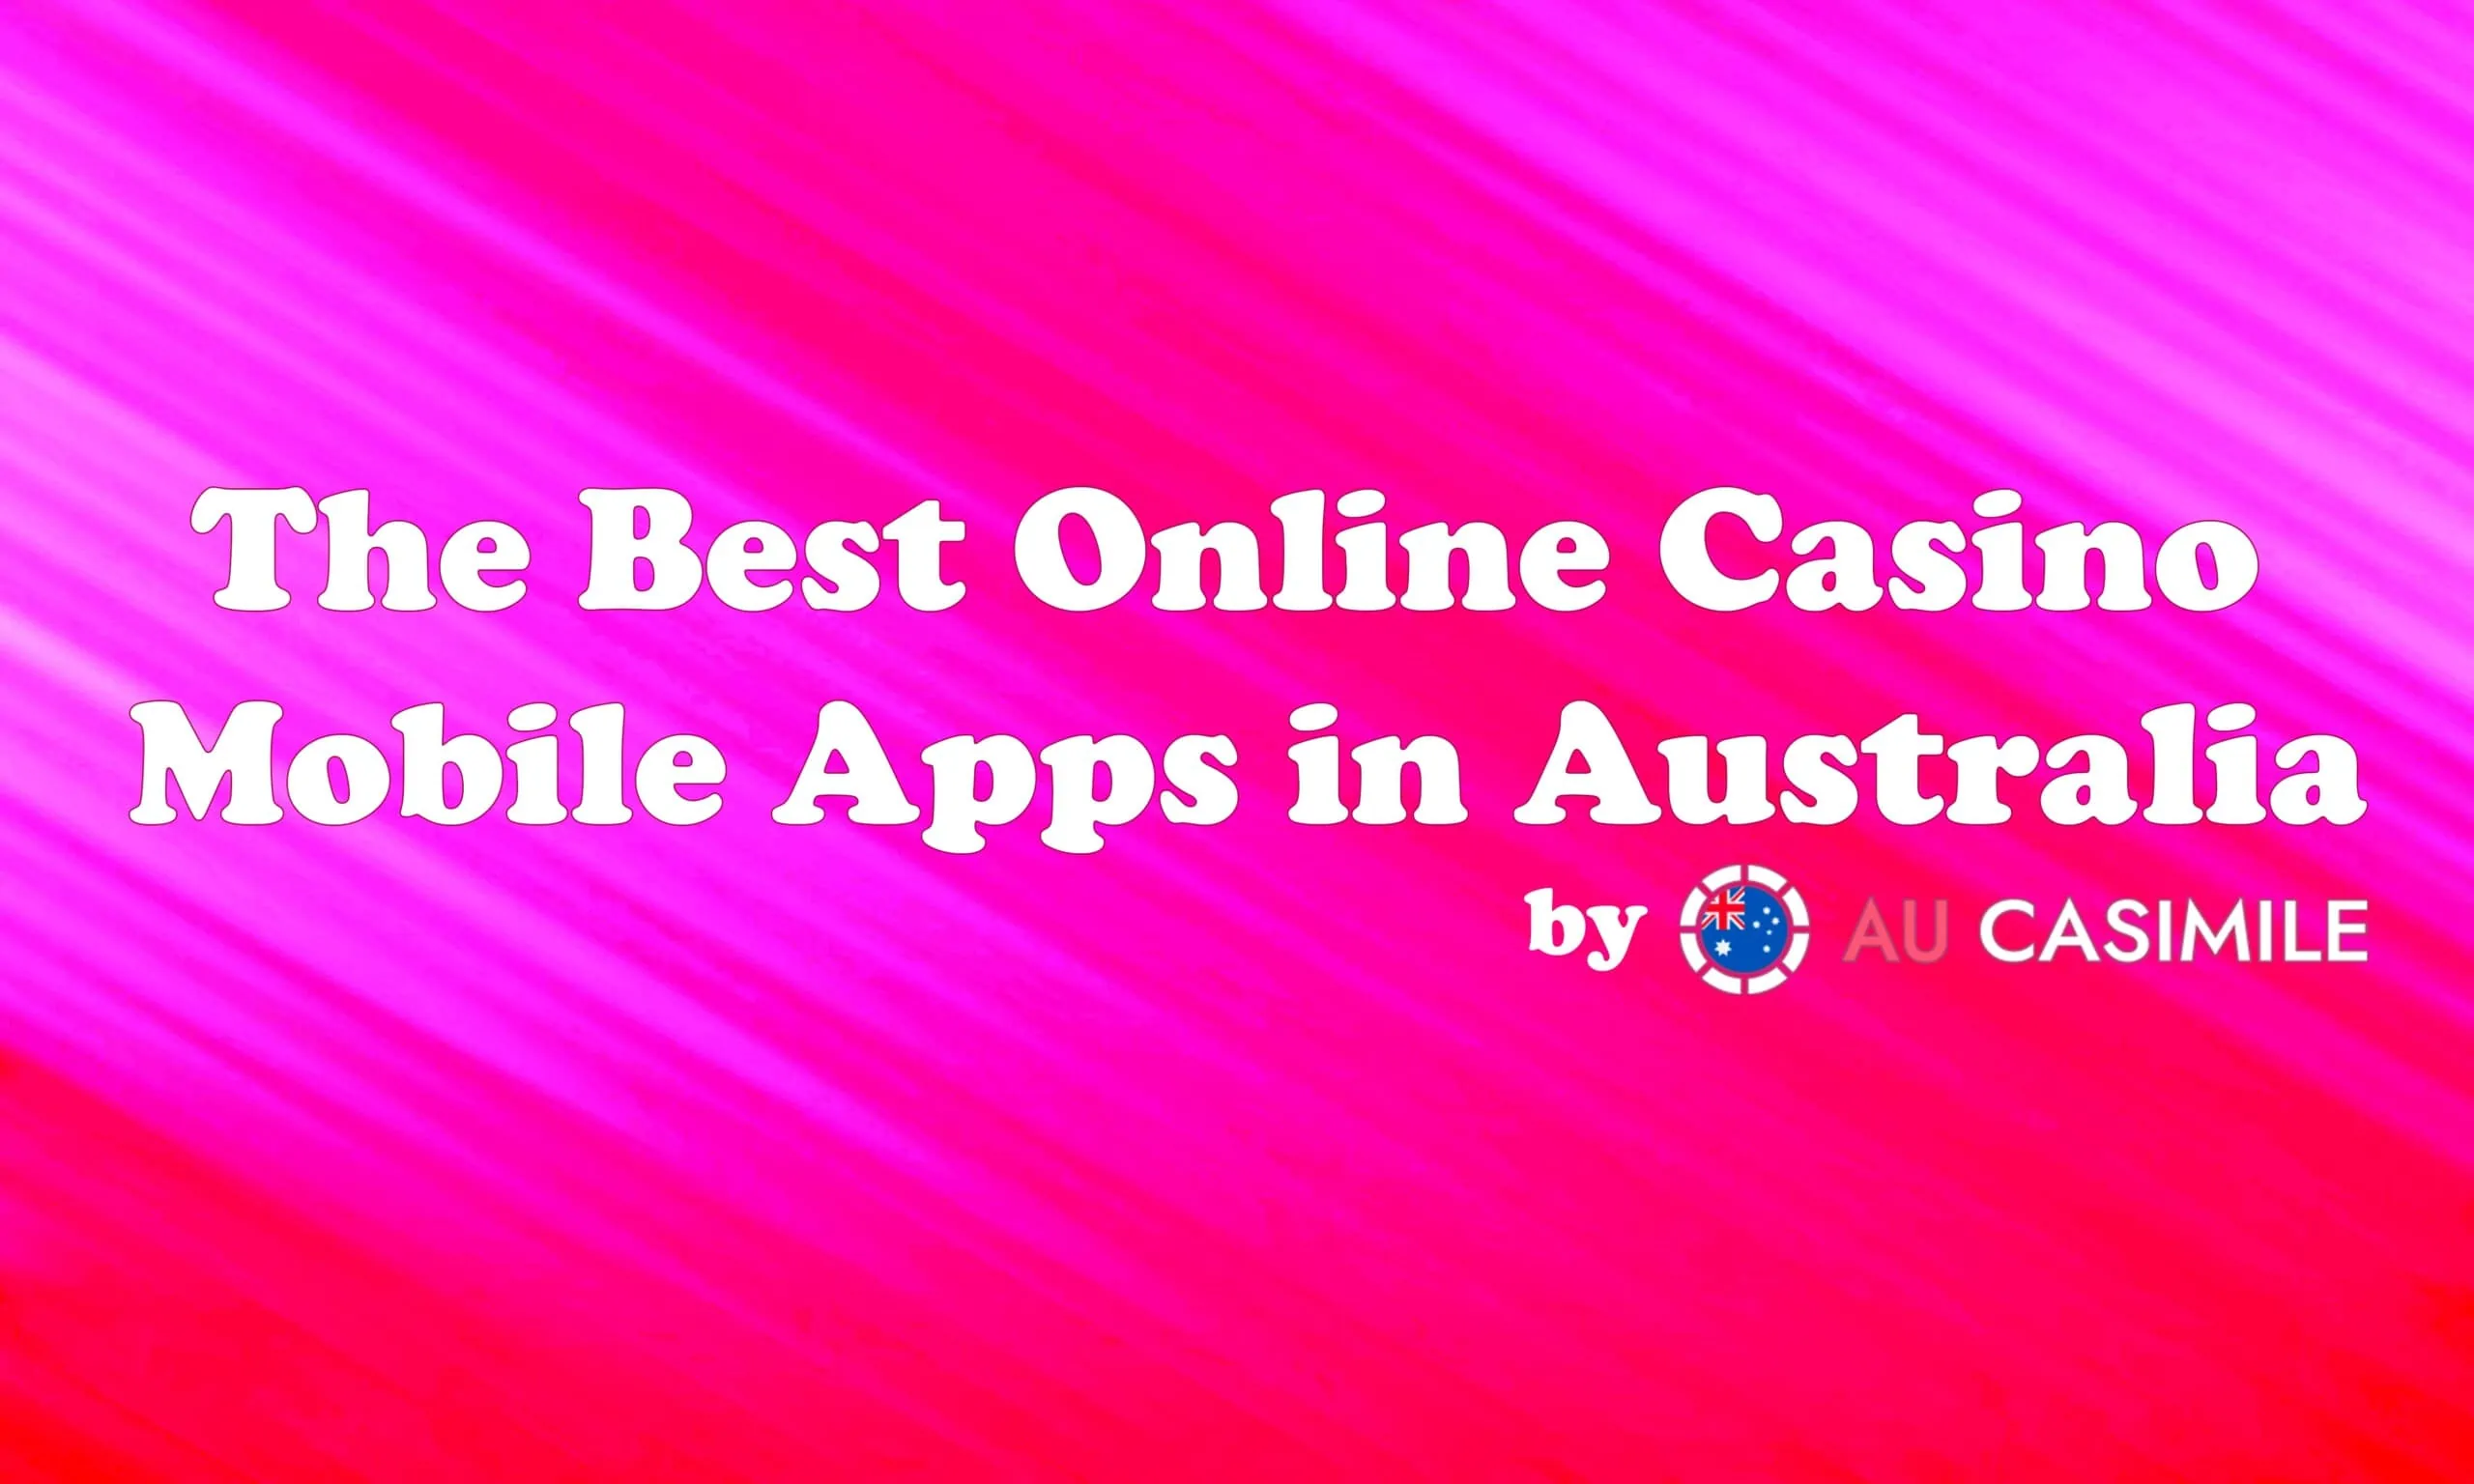 The Best Online Casino Mobile Apps in Australia